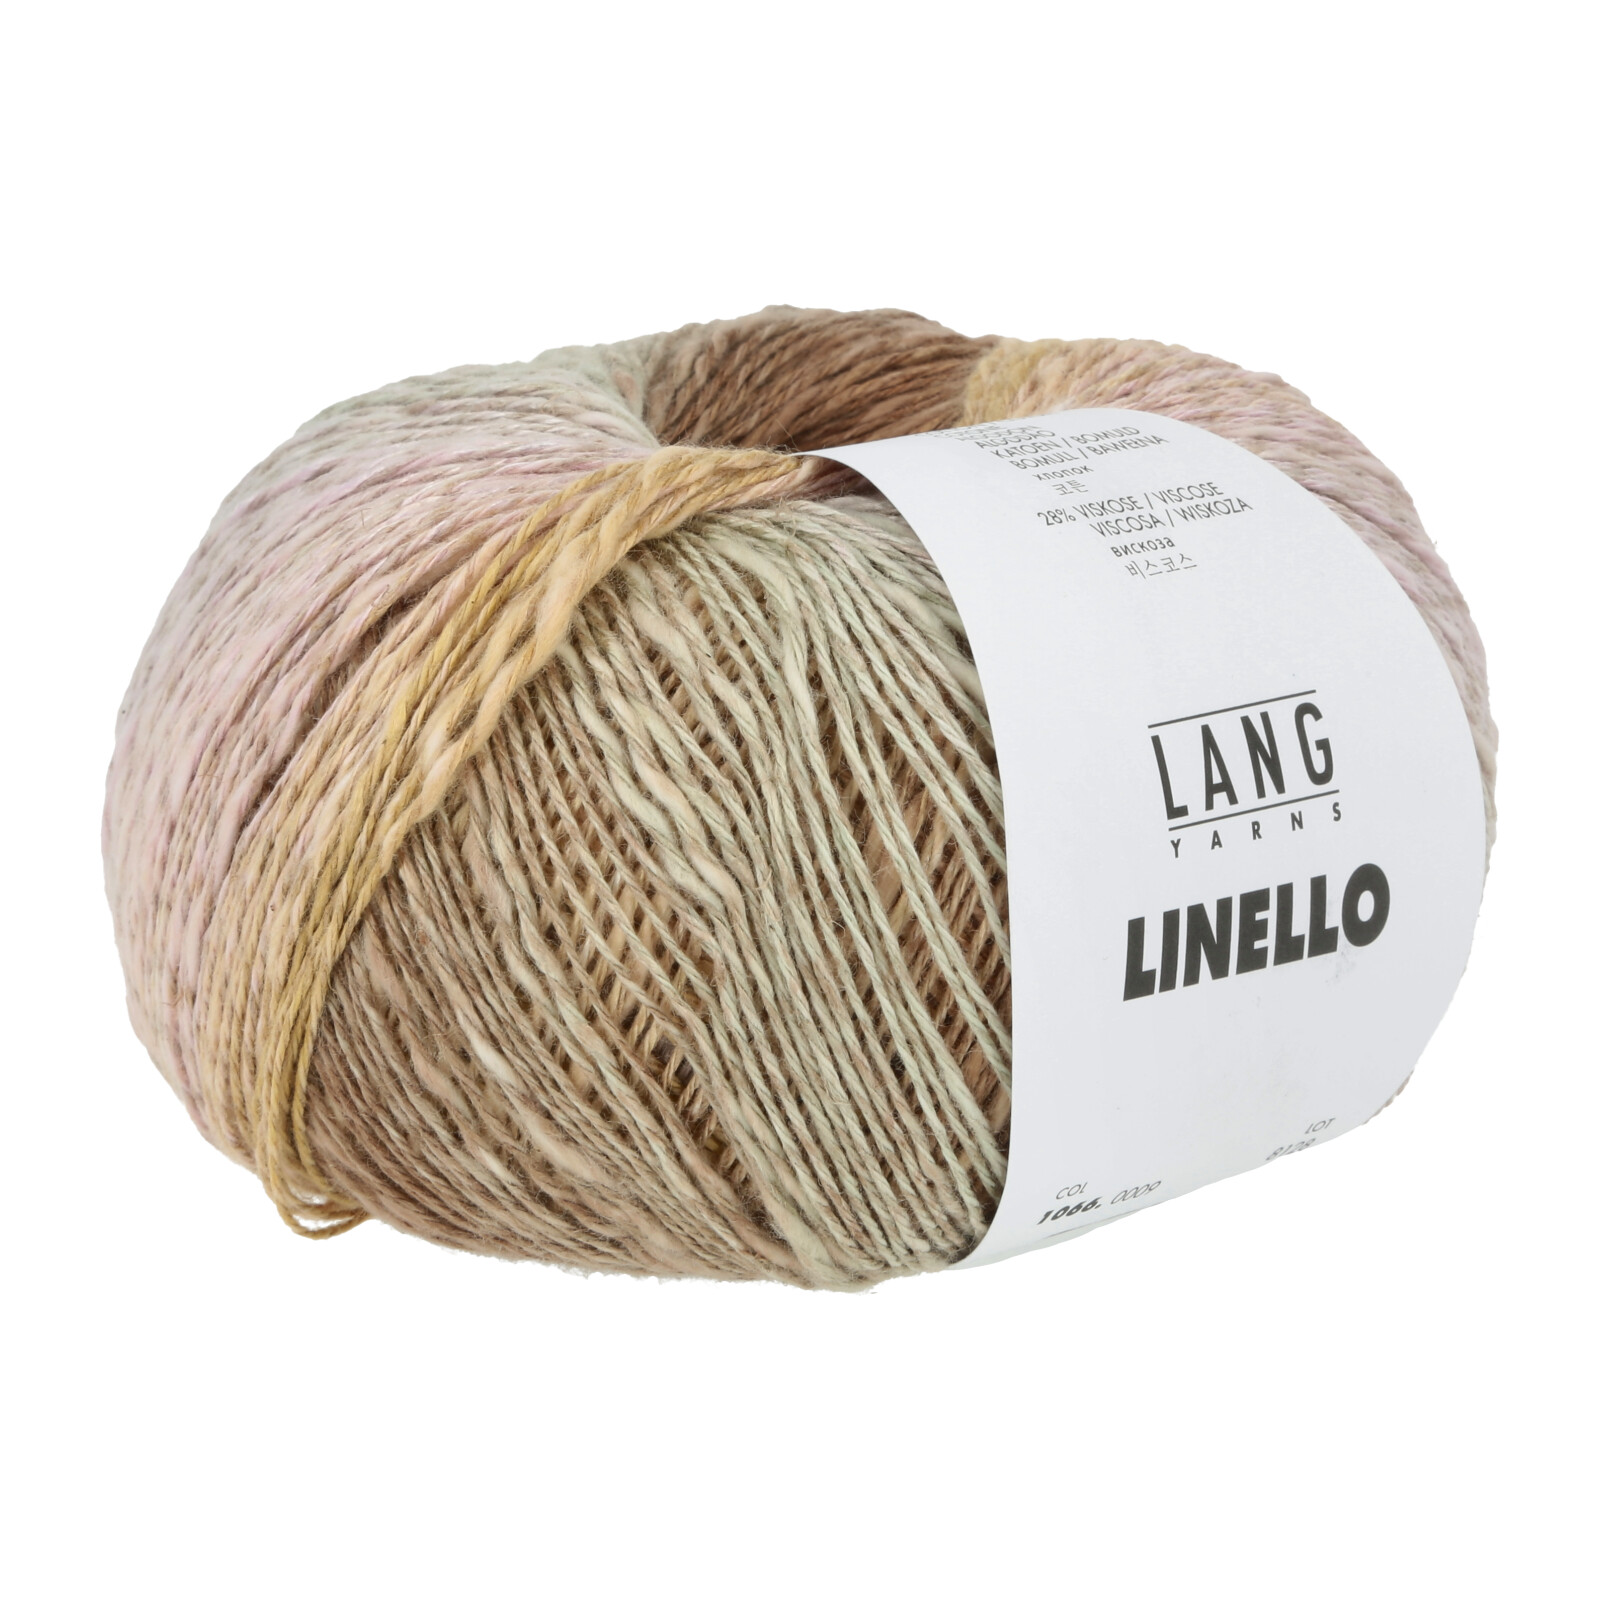 LANG Linello 009 rose/moutarde/marron